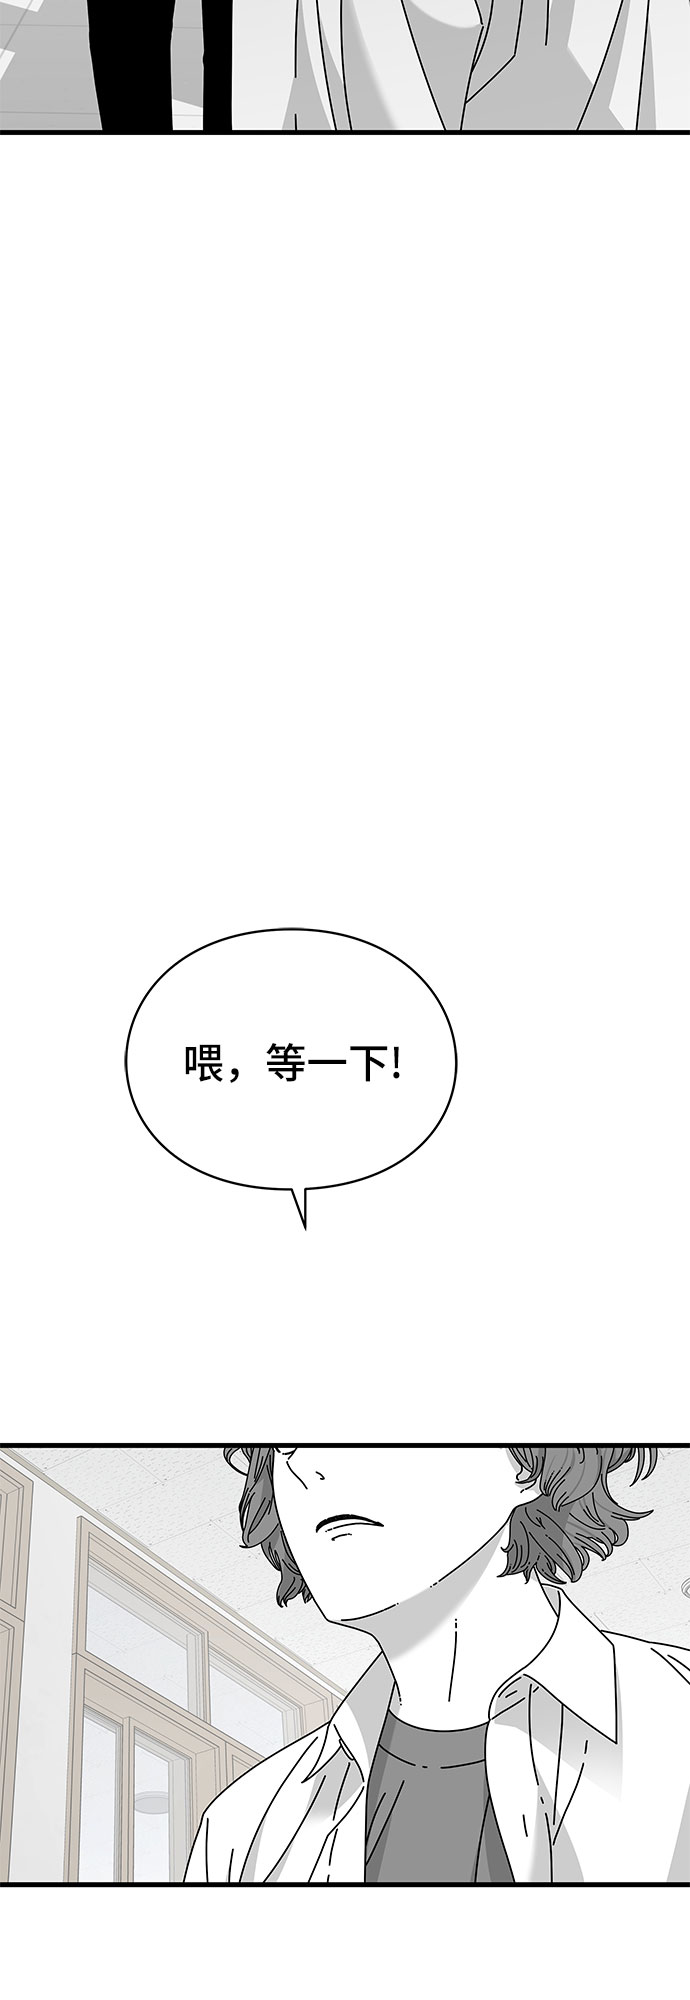 EYES - 第26話(2/2) - 3